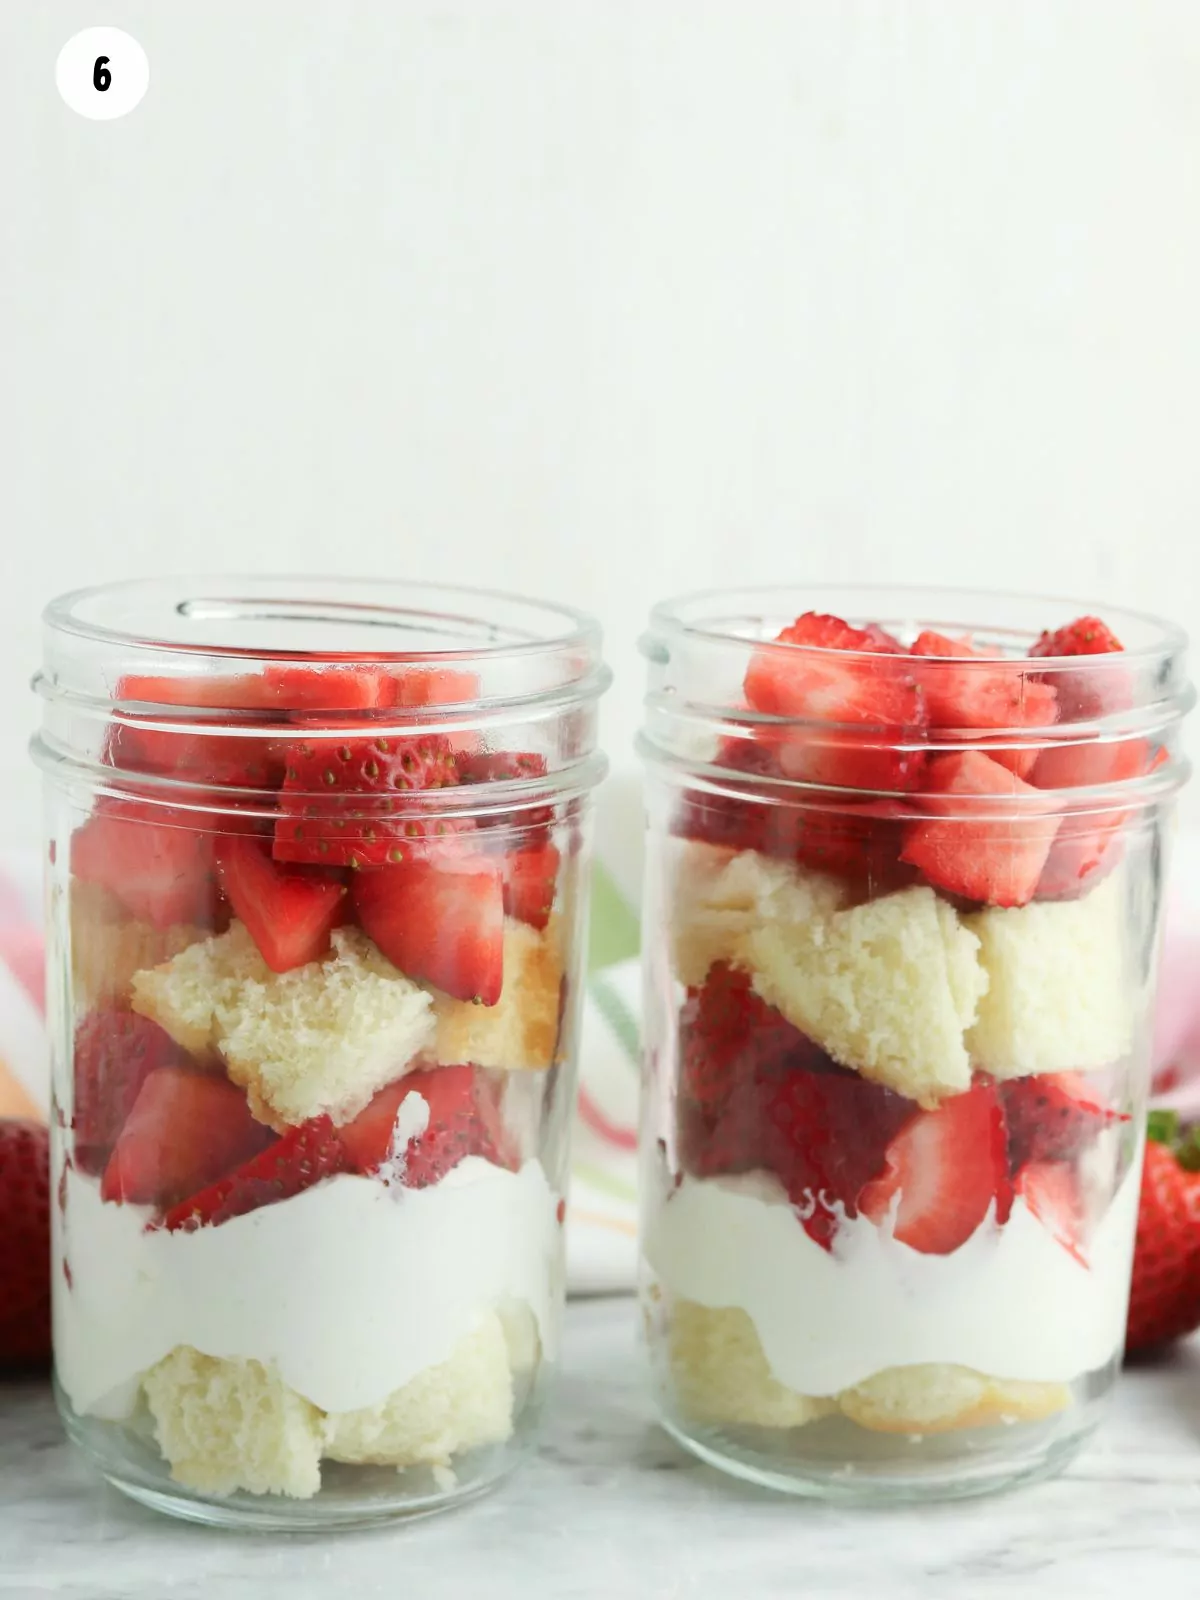 pound cake, strawberries and whipped cream in masno jars.